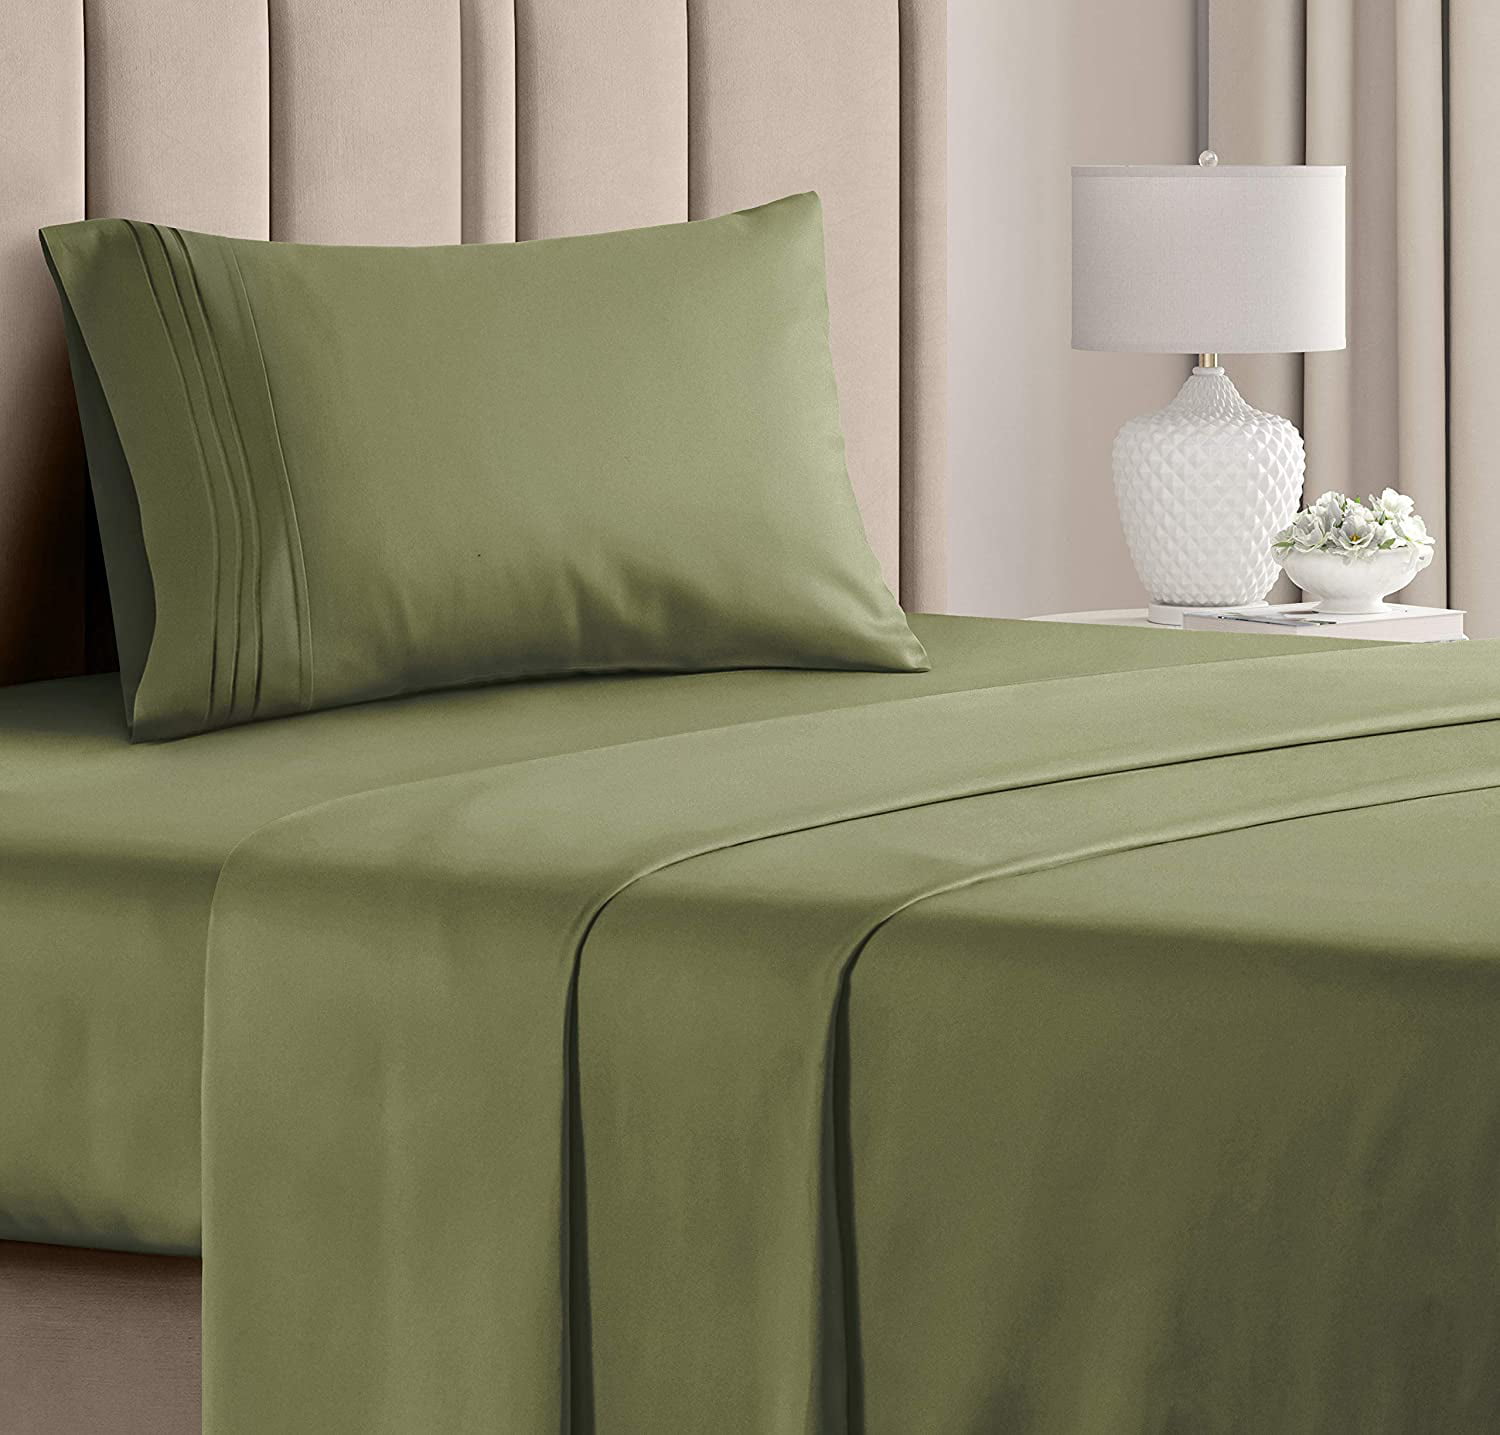 Cgk Linens Microfiber 3 Piece Bedding, Sage Green Twin Xl Bedding Sets